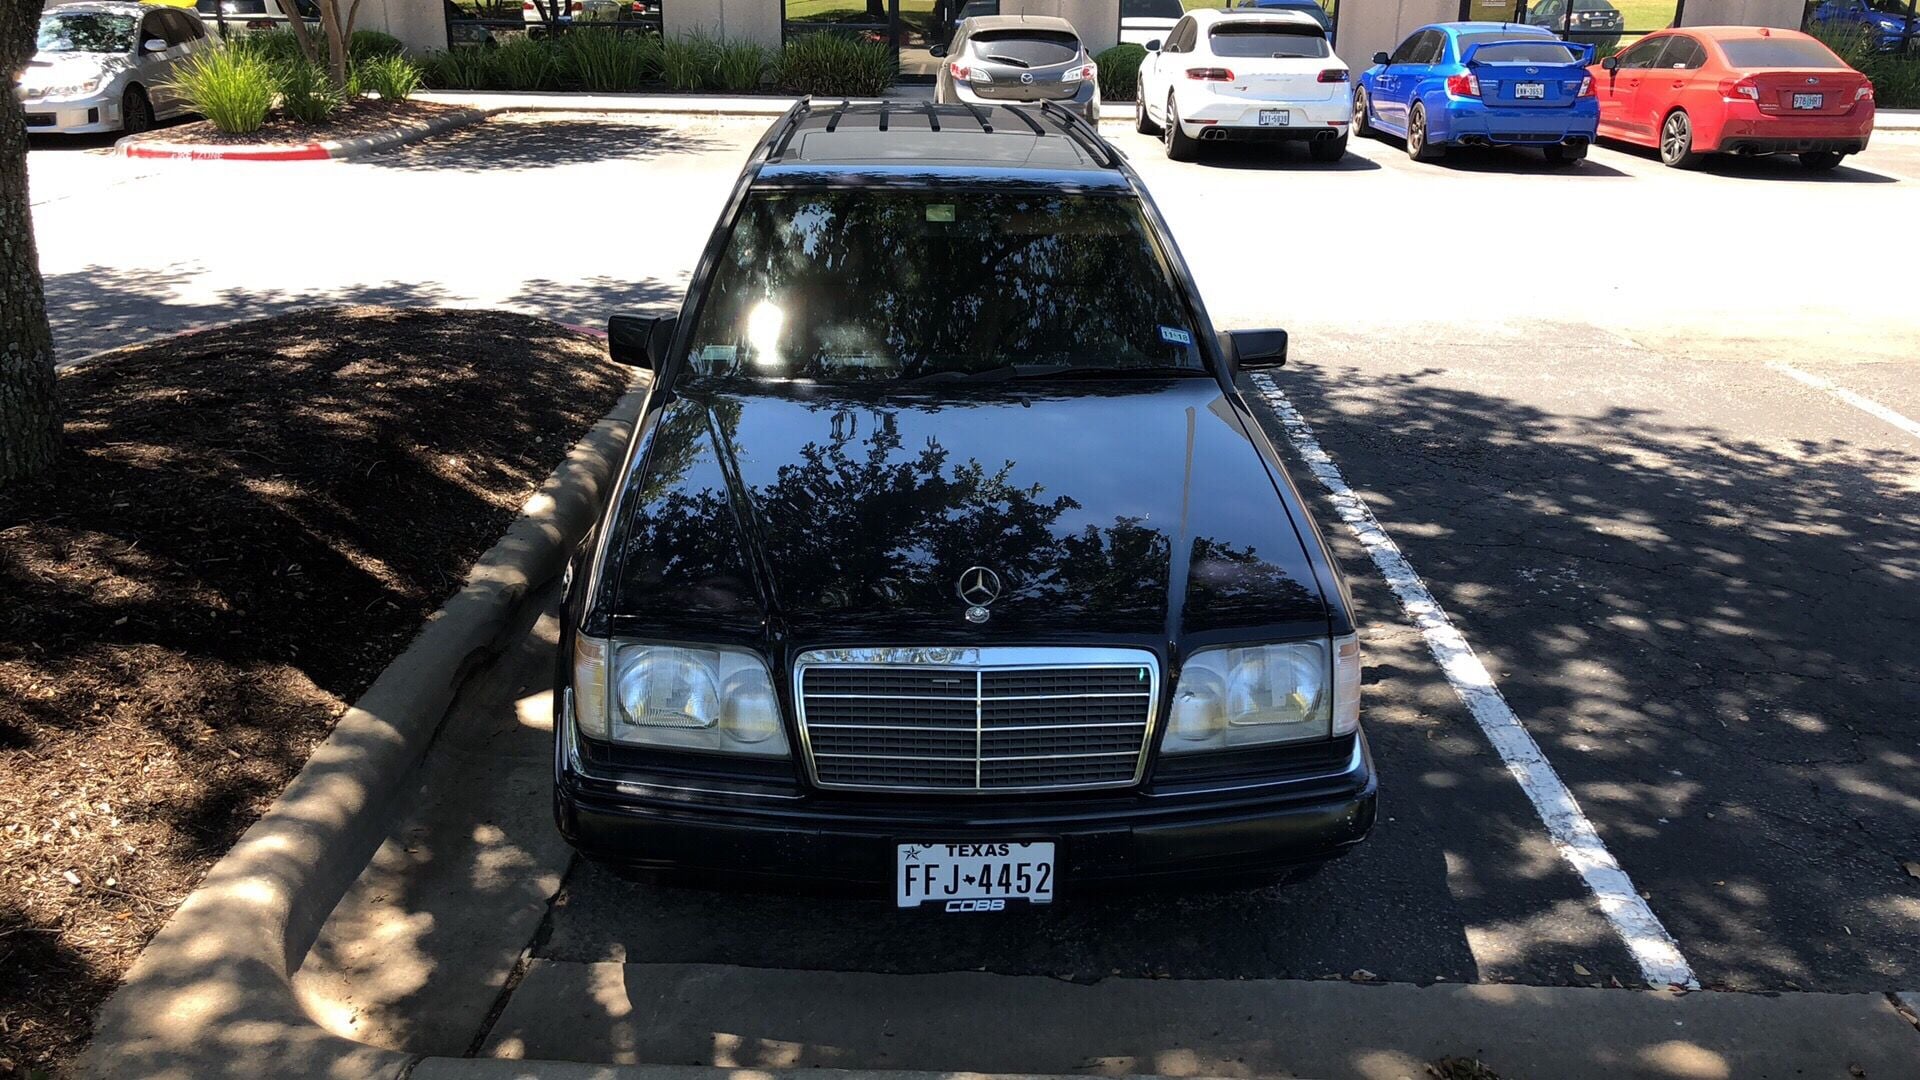 1995 Mercedes-Benz E320 - 1995 Mercedes e320 Wagon - Used - VIN WDBEA92E3SF339902 - 185,000 Miles - 6 cyl - 2WD - Automatic - Wagon - Blue - Austin, TX 78701, United States